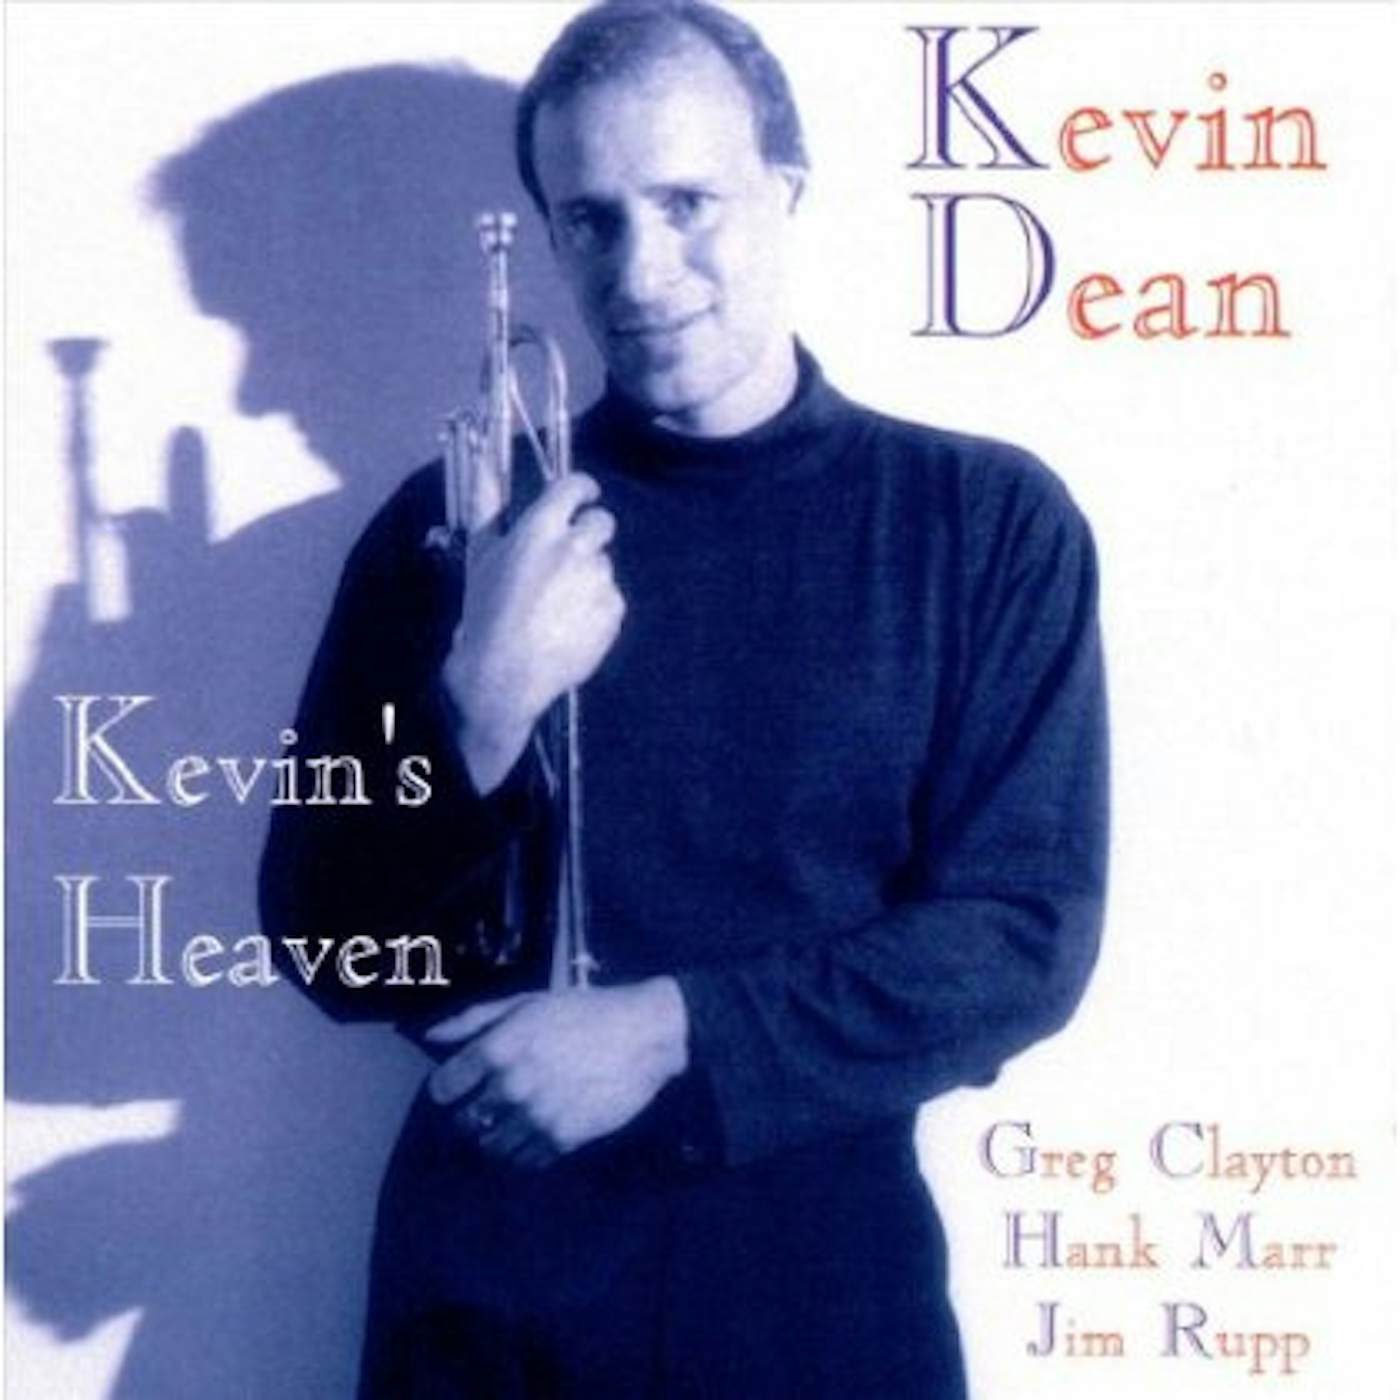 Kevin Dean KEVIN'S HEAVEN CD